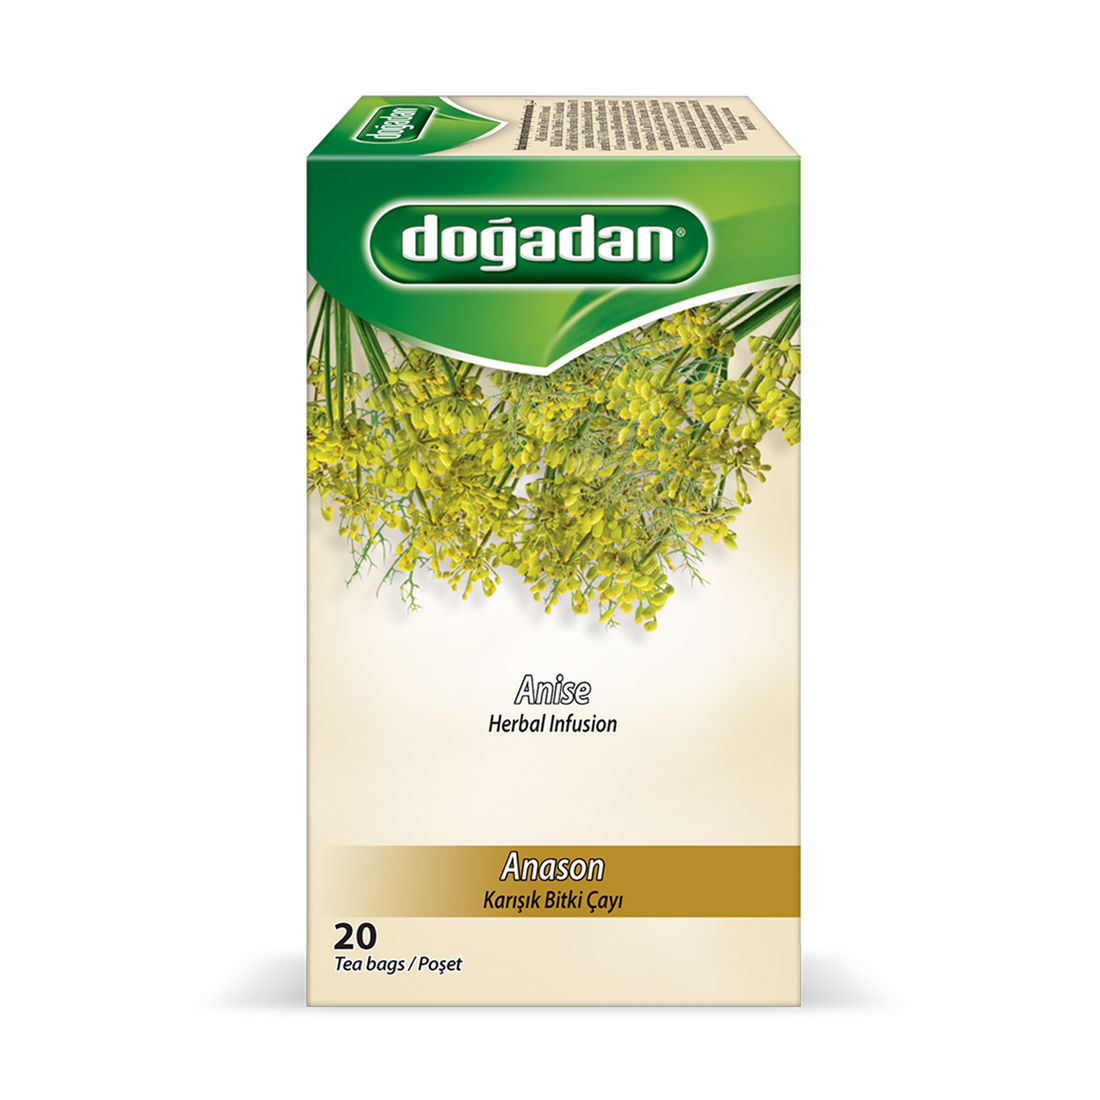 Dogadan Anise Mix Herbal Tea 2g×20P | Dogadan Anason Karisik Bitki Cayi | Anise Herbal Infusion